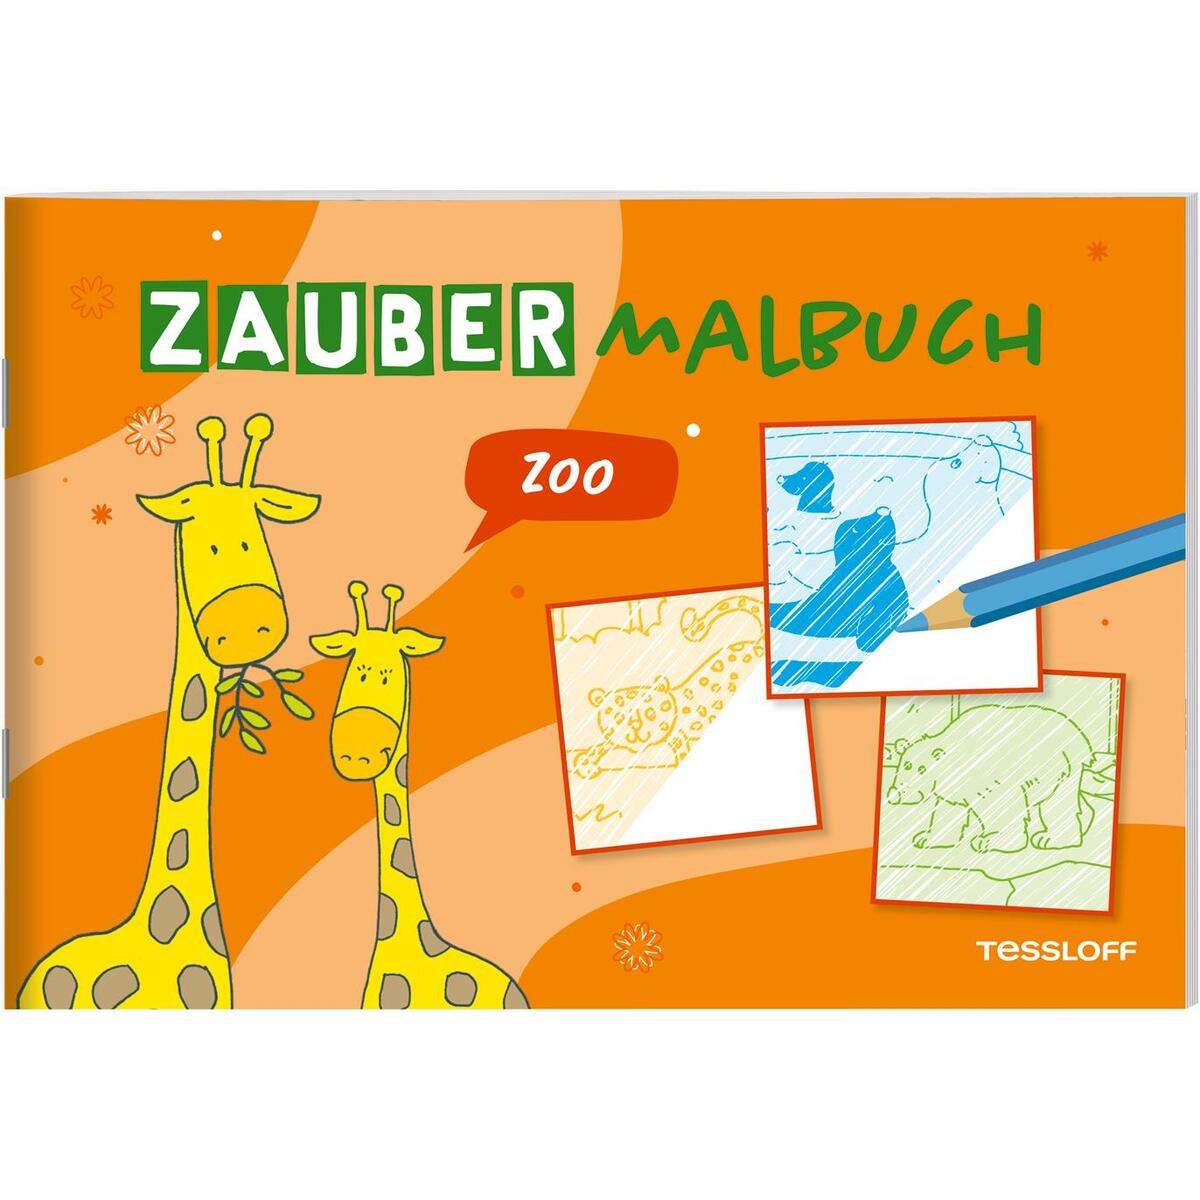 Zaubermalbuch. Zoo von Tessloff Verlag